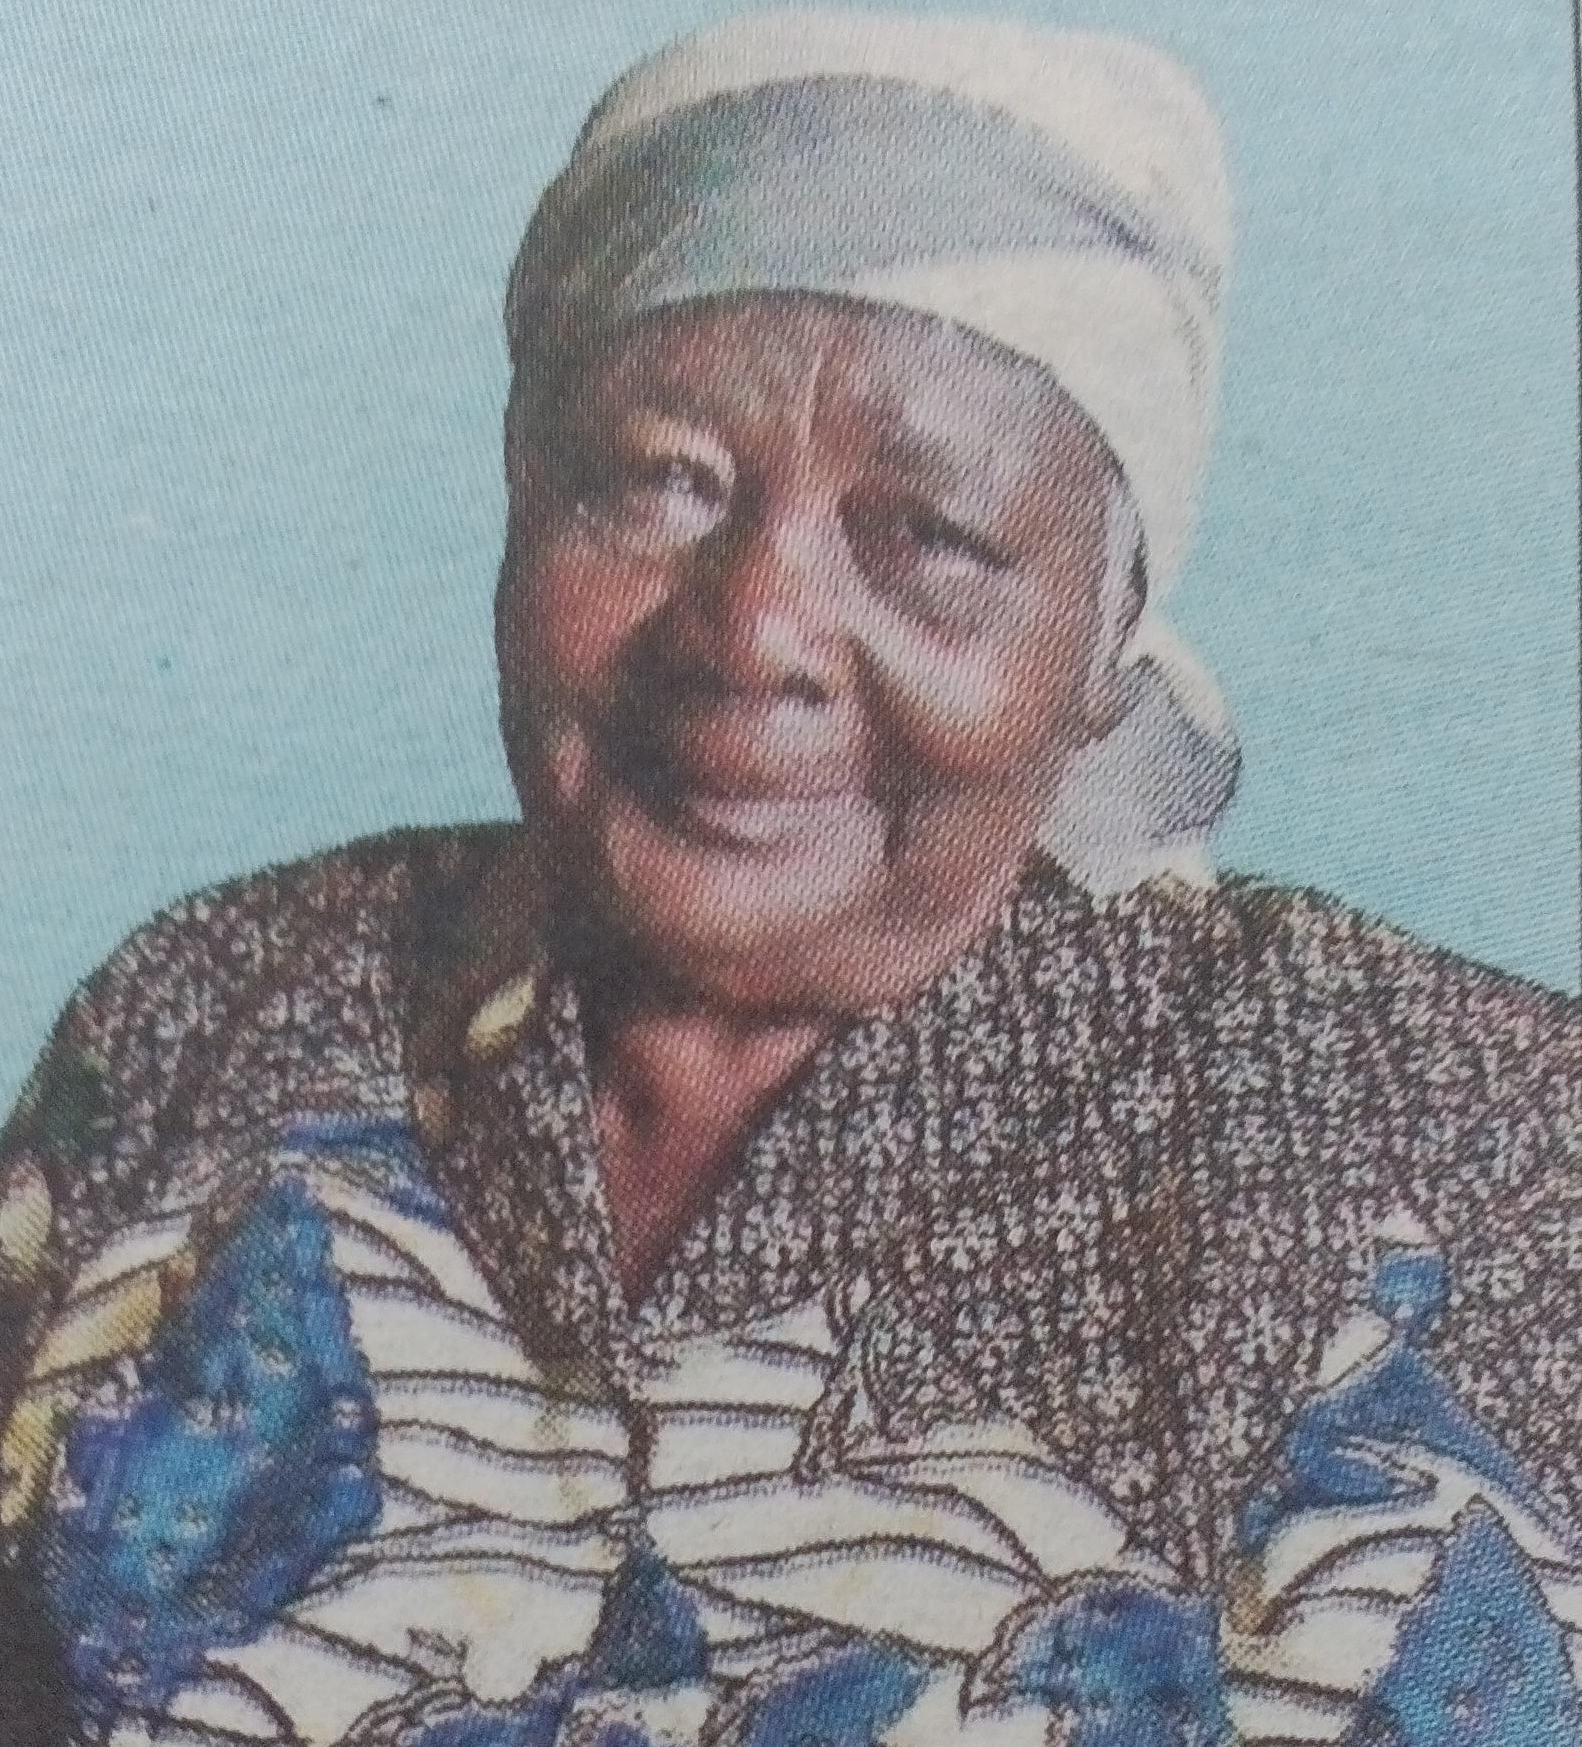 Obituary Image of Florence Olenyo Mukanga